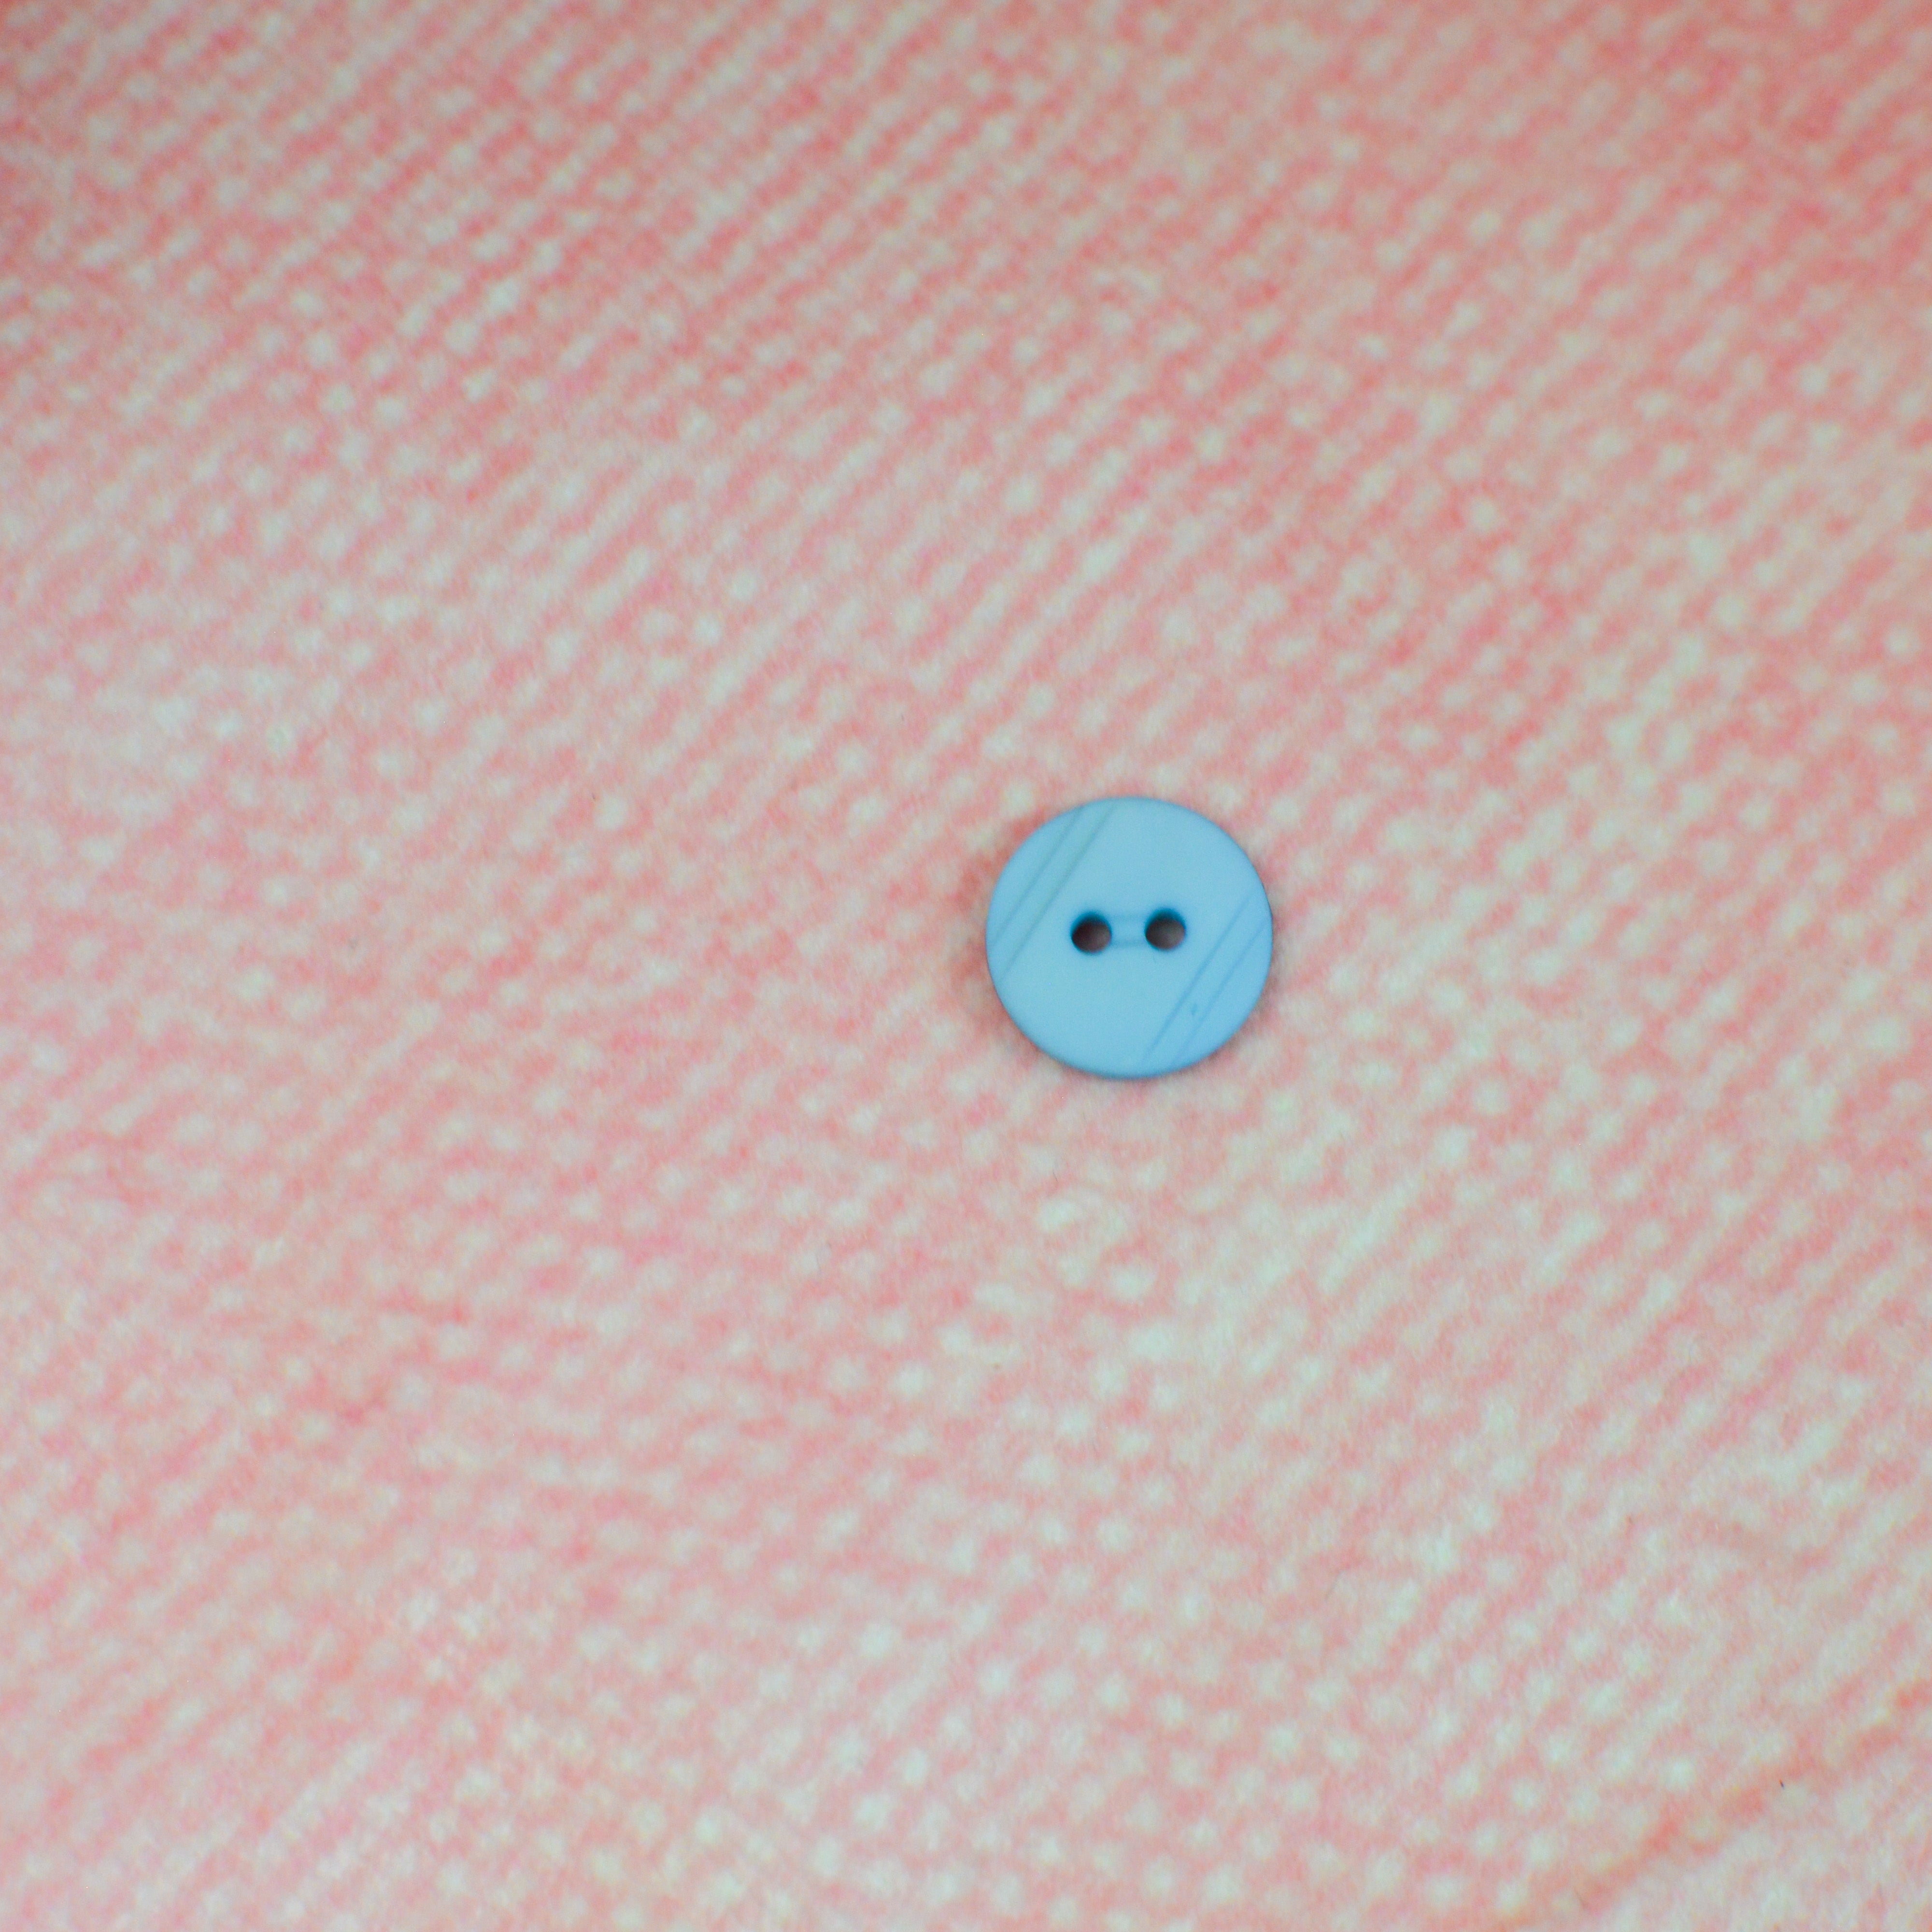 Kunststoffknopf - 13mm - hellblau rund matt Knopf poshpinks